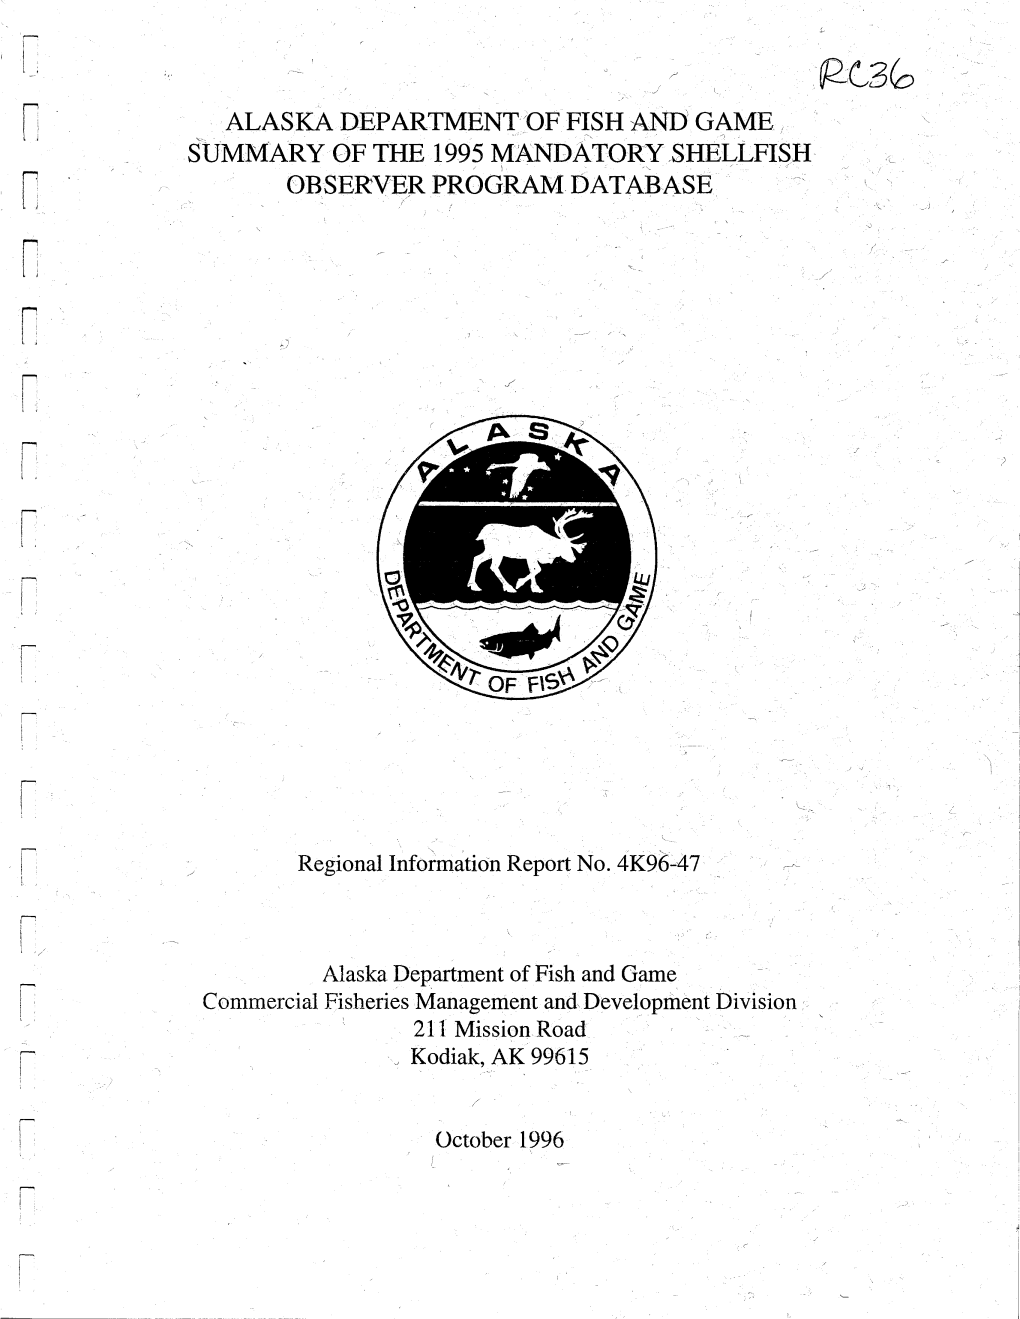 Summary of the 1995 Mandatory Shellfish Observer Program Database